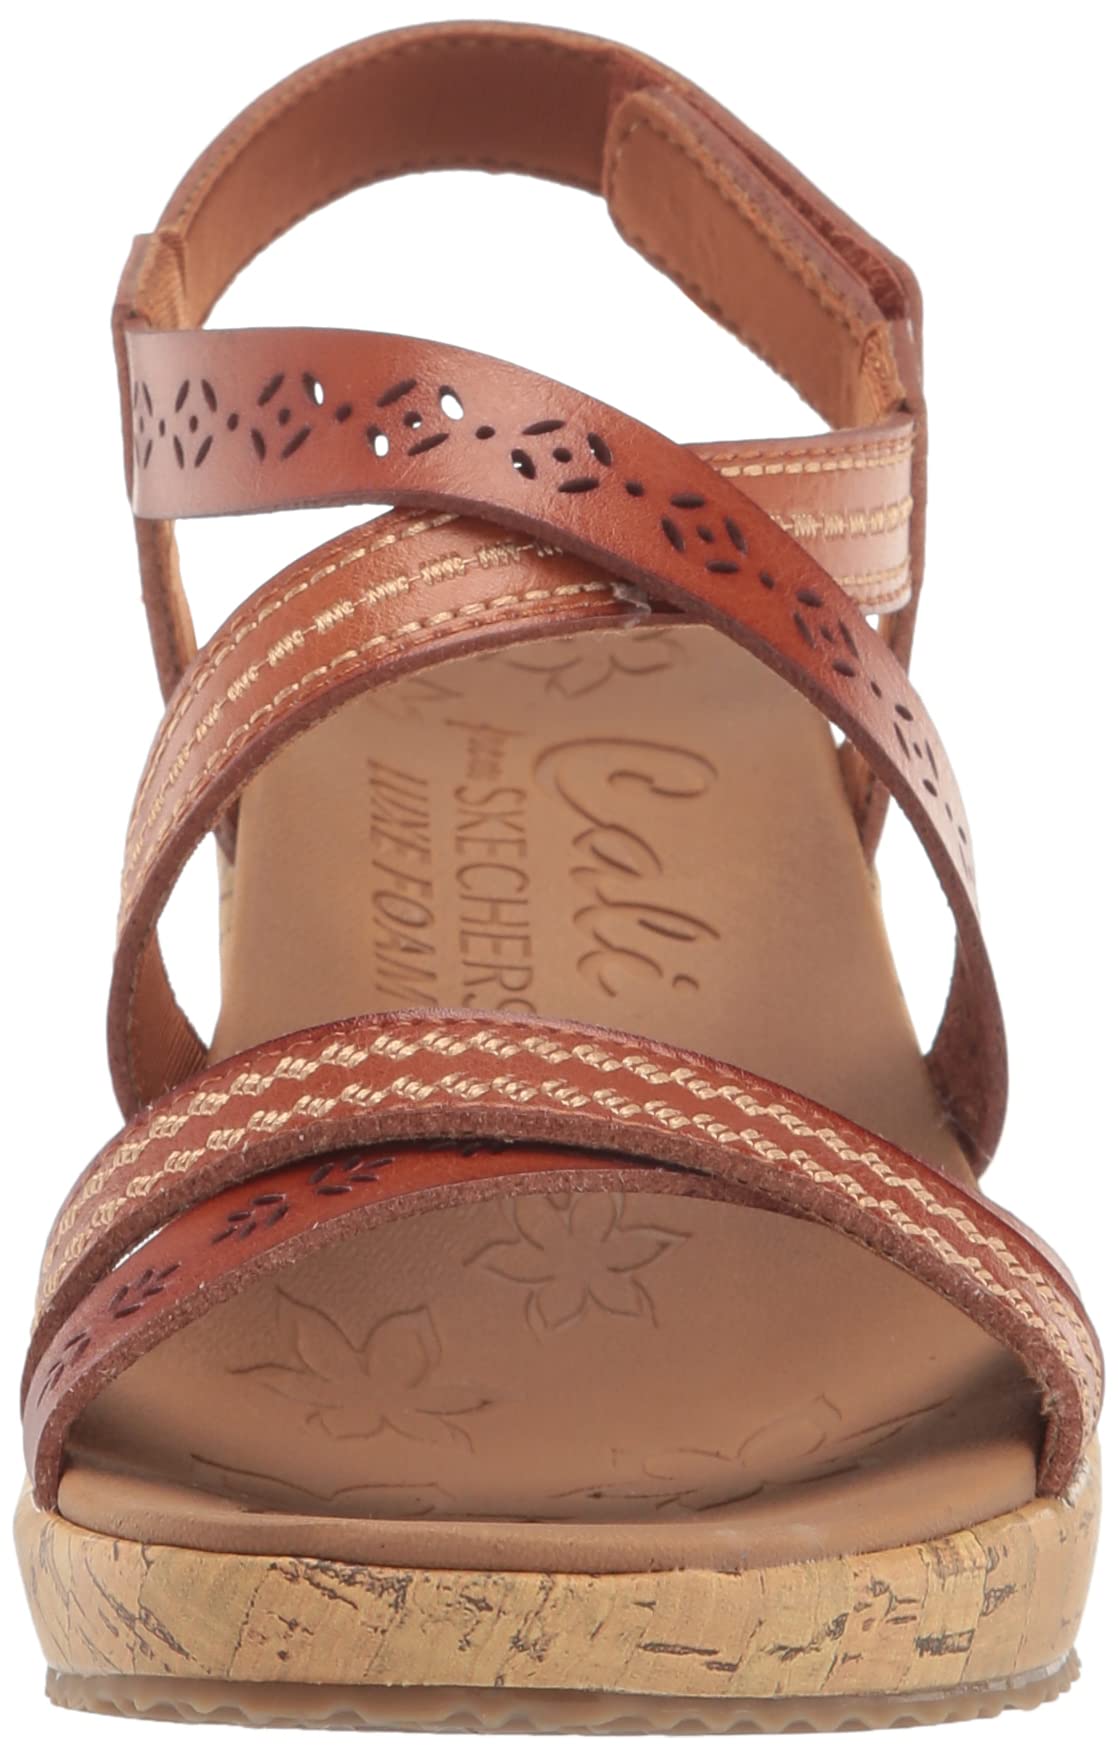 Skechers Women's Beverlee Delicate Glow Sandal